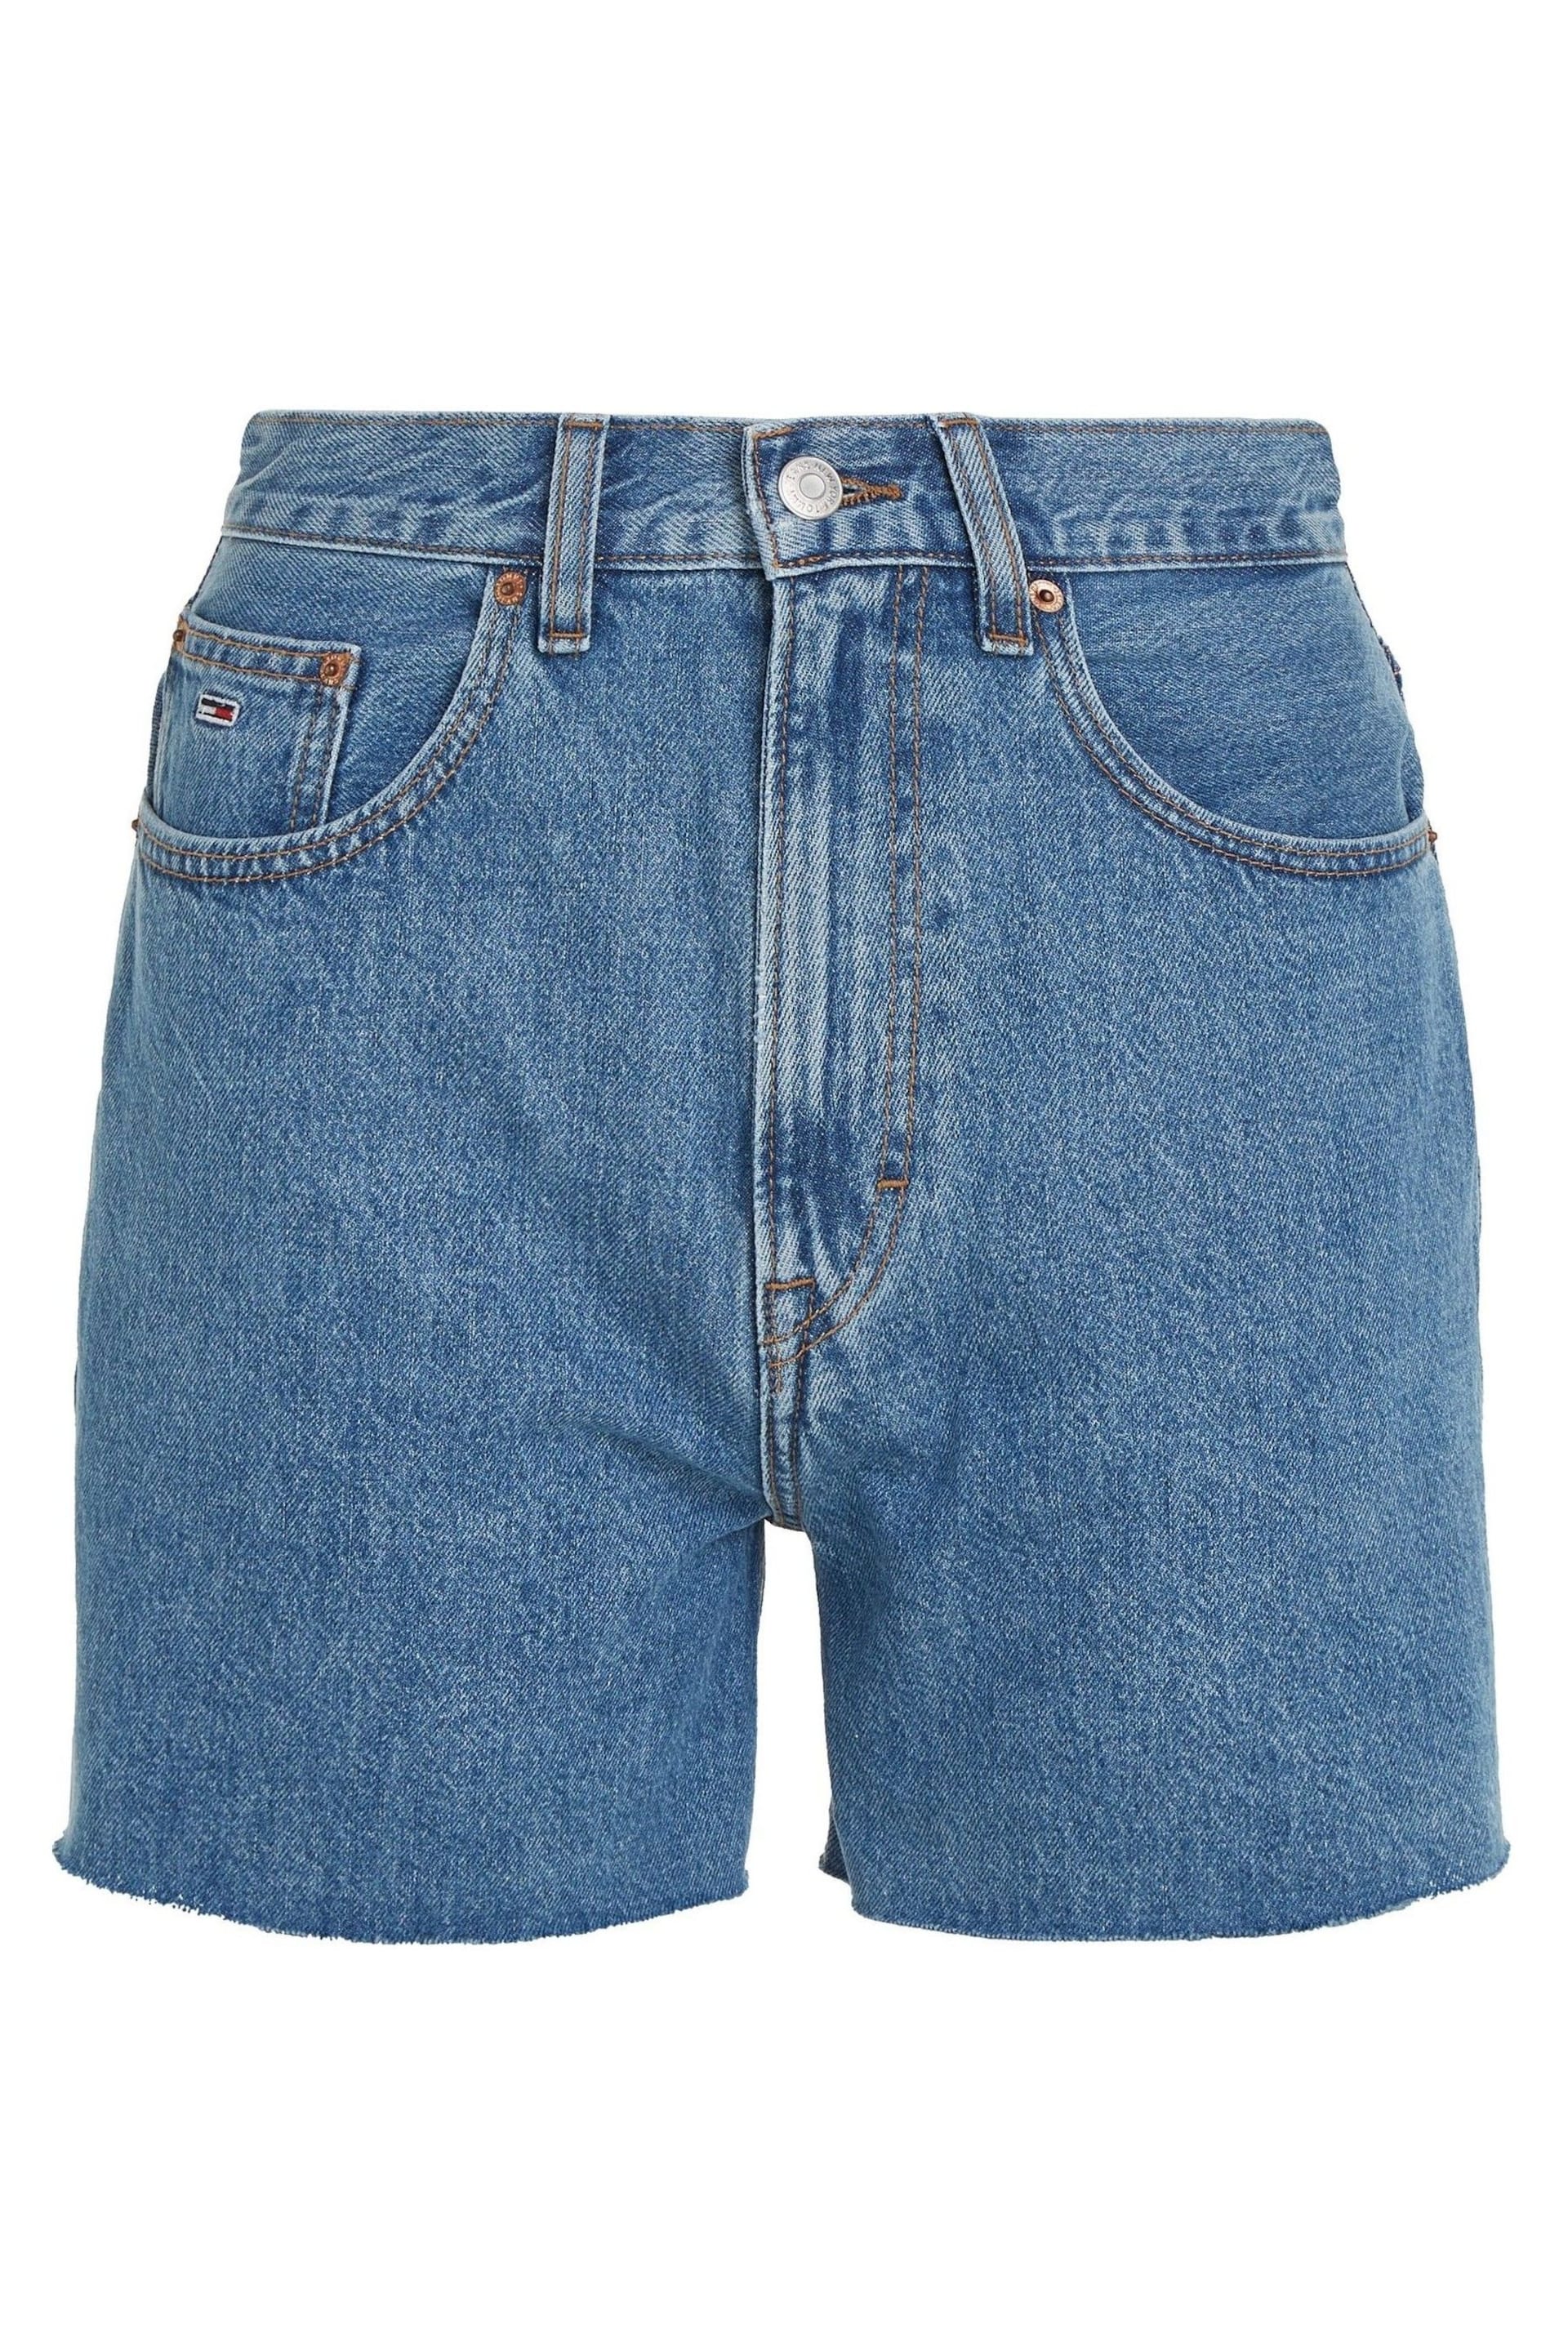 Tommy Jeans Mom Blue Denim Shorts - Image 4 of 6